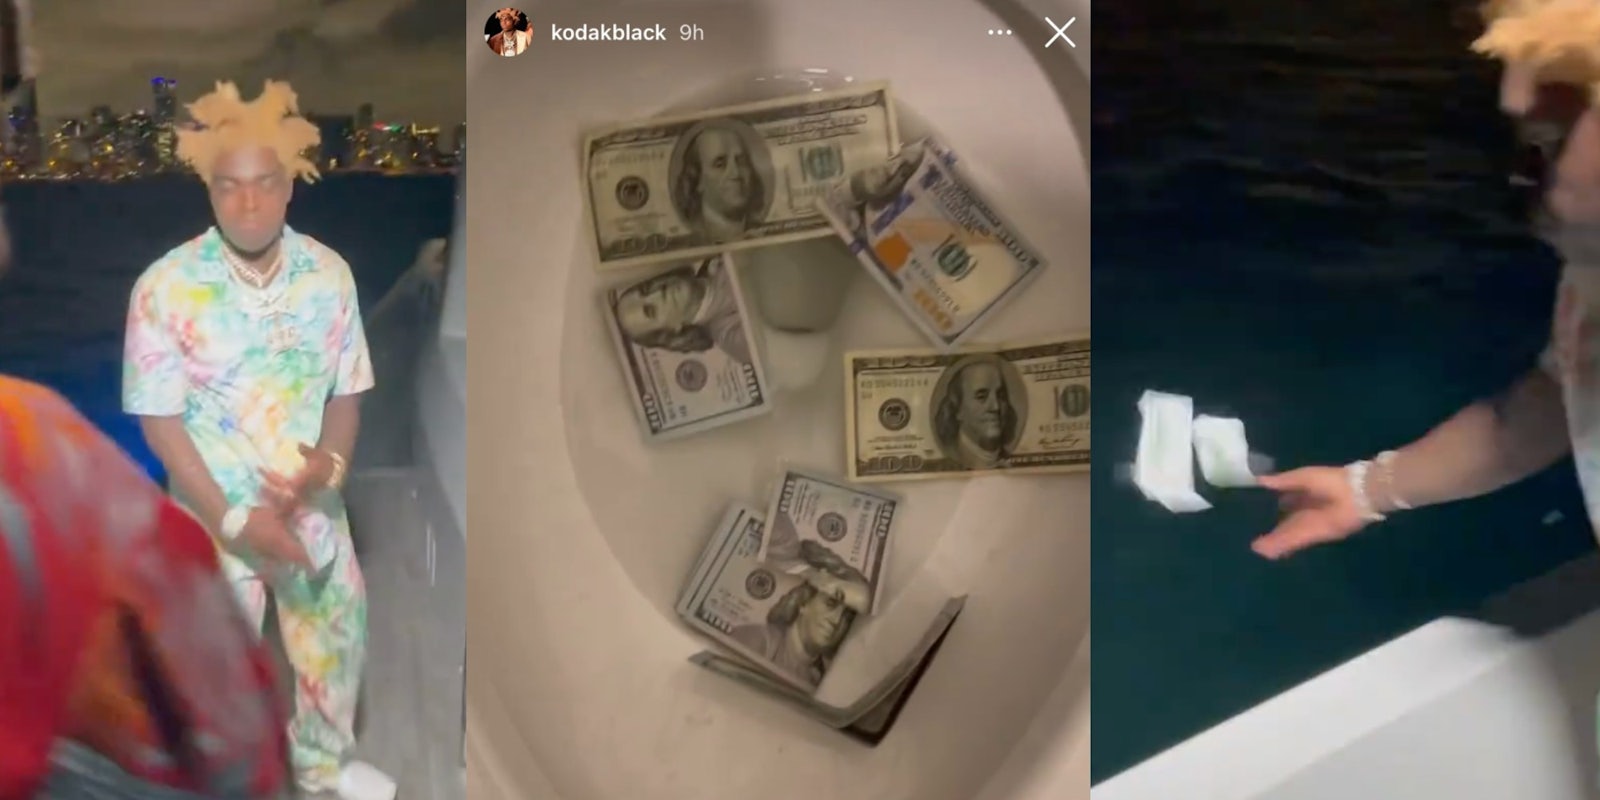 kodak black on a boat, kodak black flushing money down the toilet, kodak black throwing money off a boat